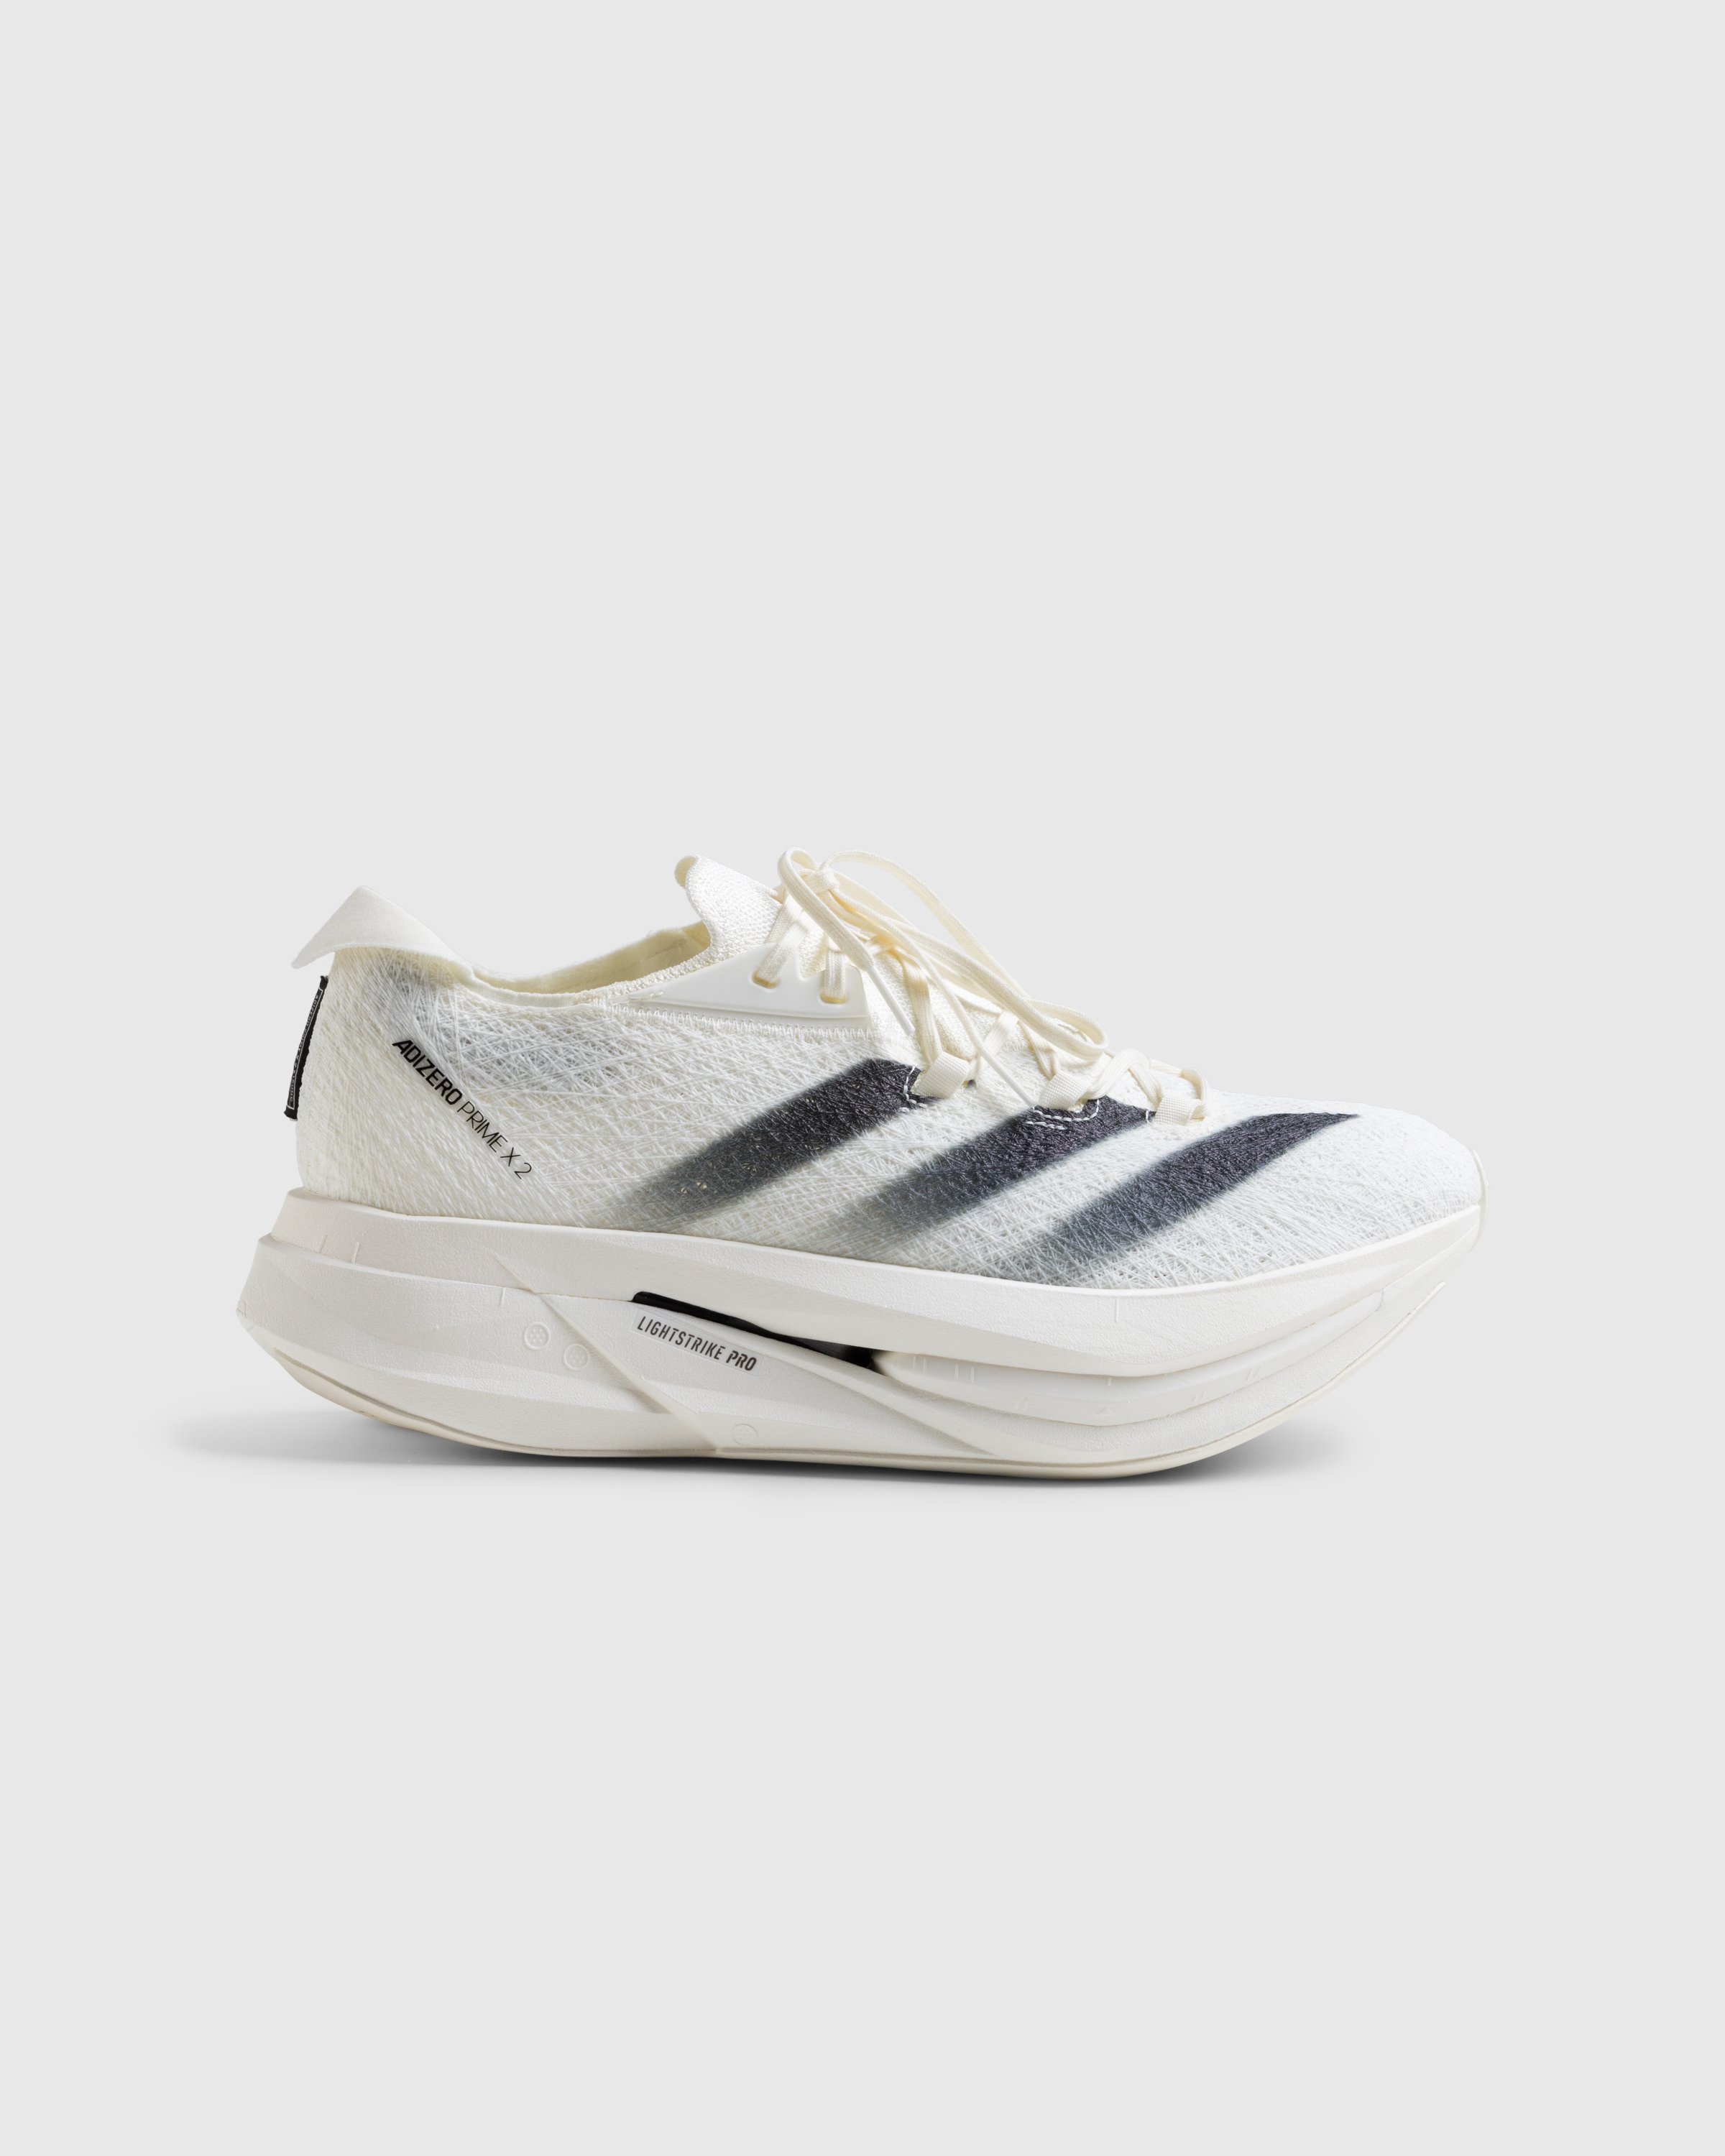 Y-3 - Prime X 2 Strun Owhite/Cblack/O - Footwear - White - Image 1